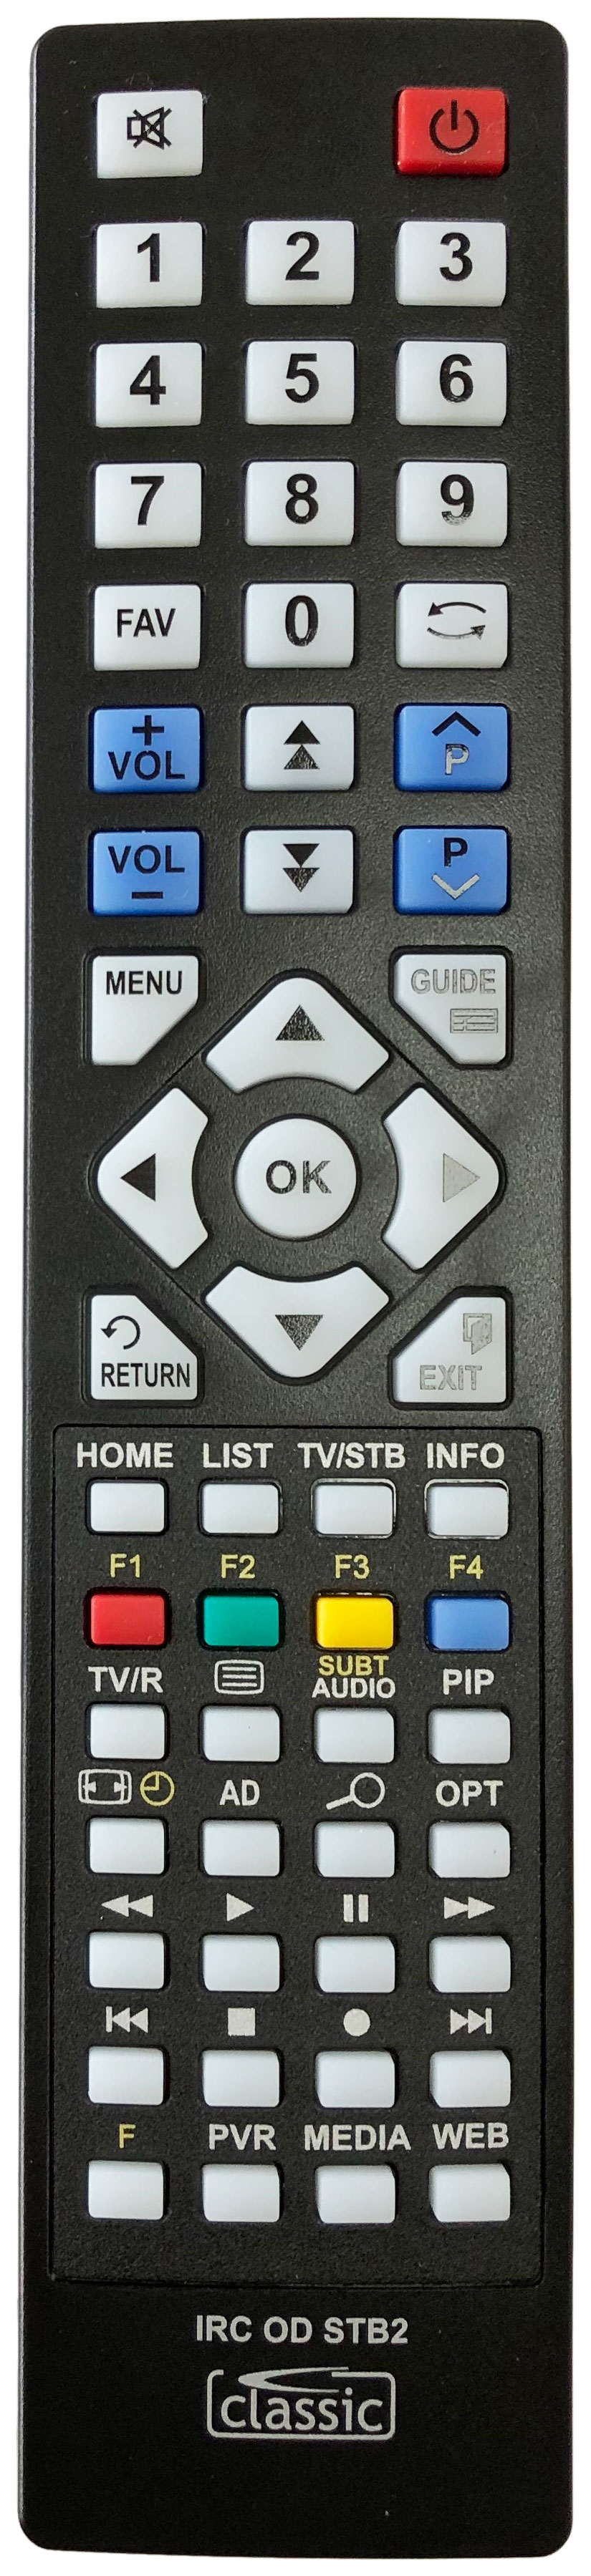 SAGEM DTR94250S HD Remote Control